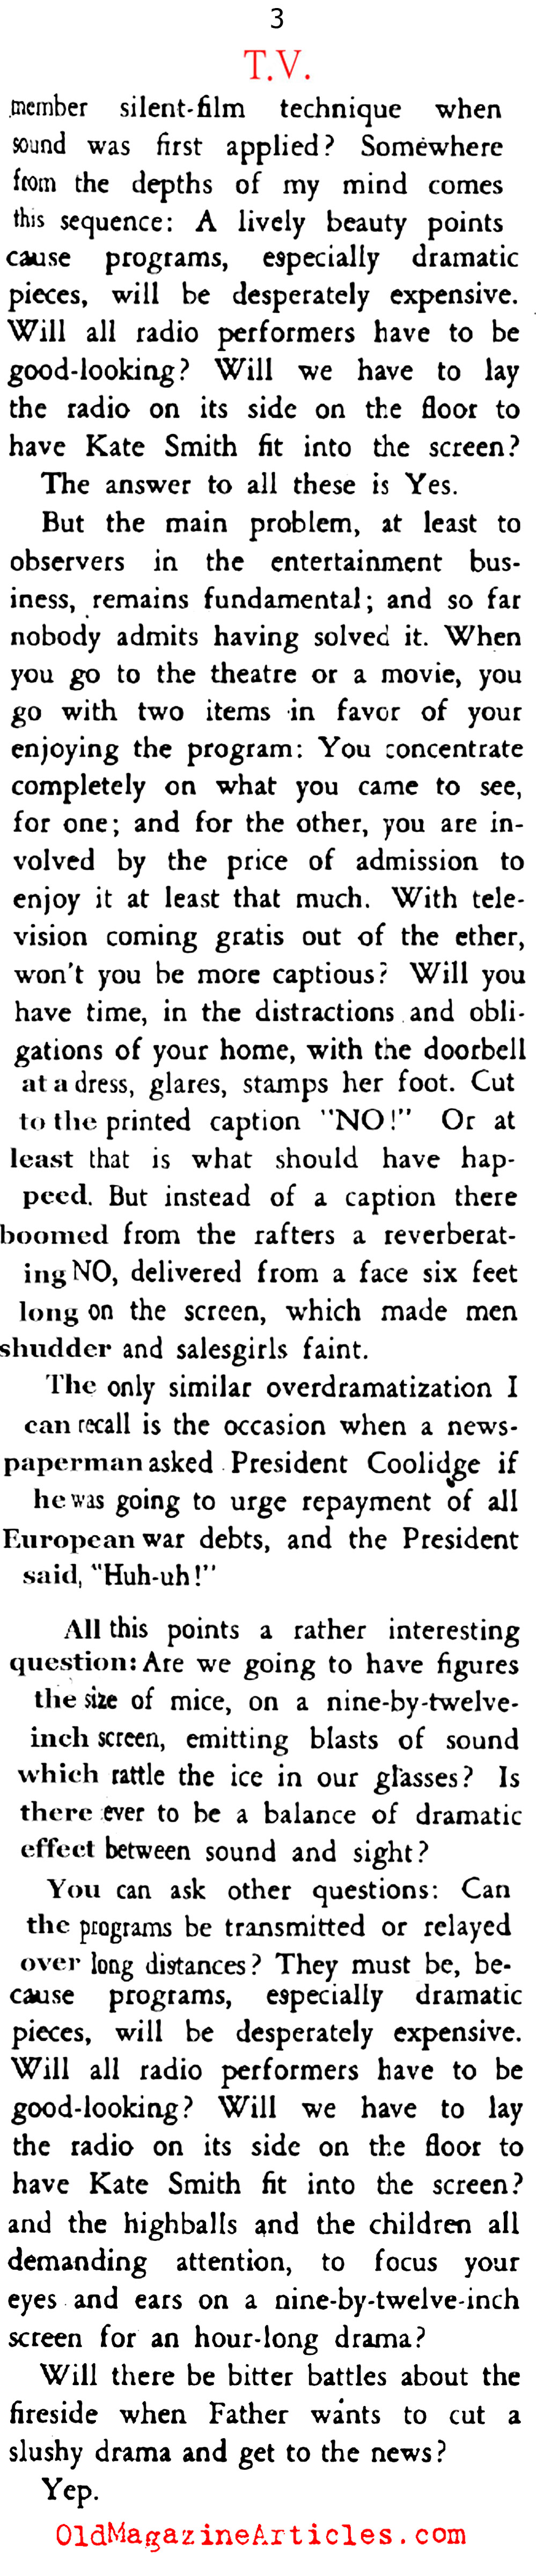 Anticipating the Television Juggernaut  (Stage Magazine, 1939)